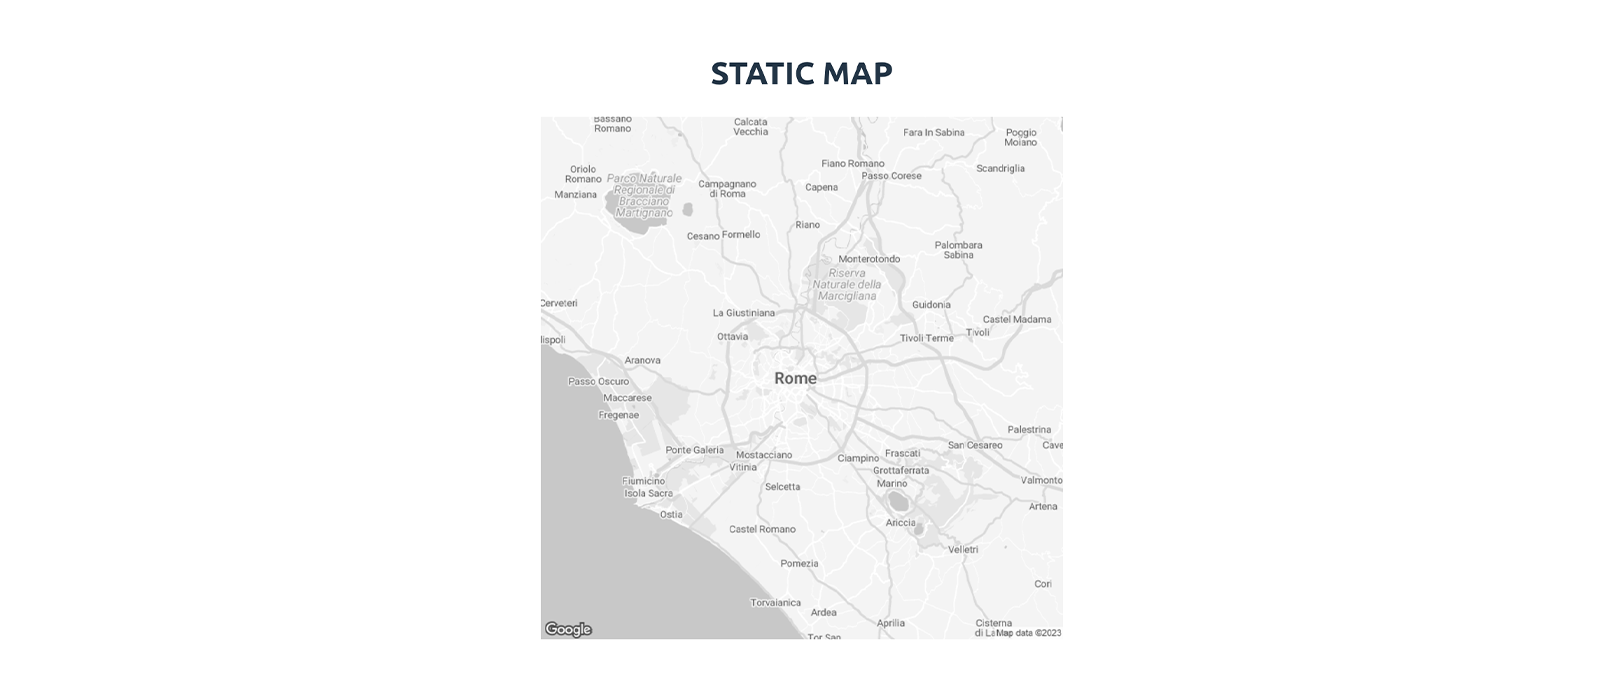 A static greyscale Google map